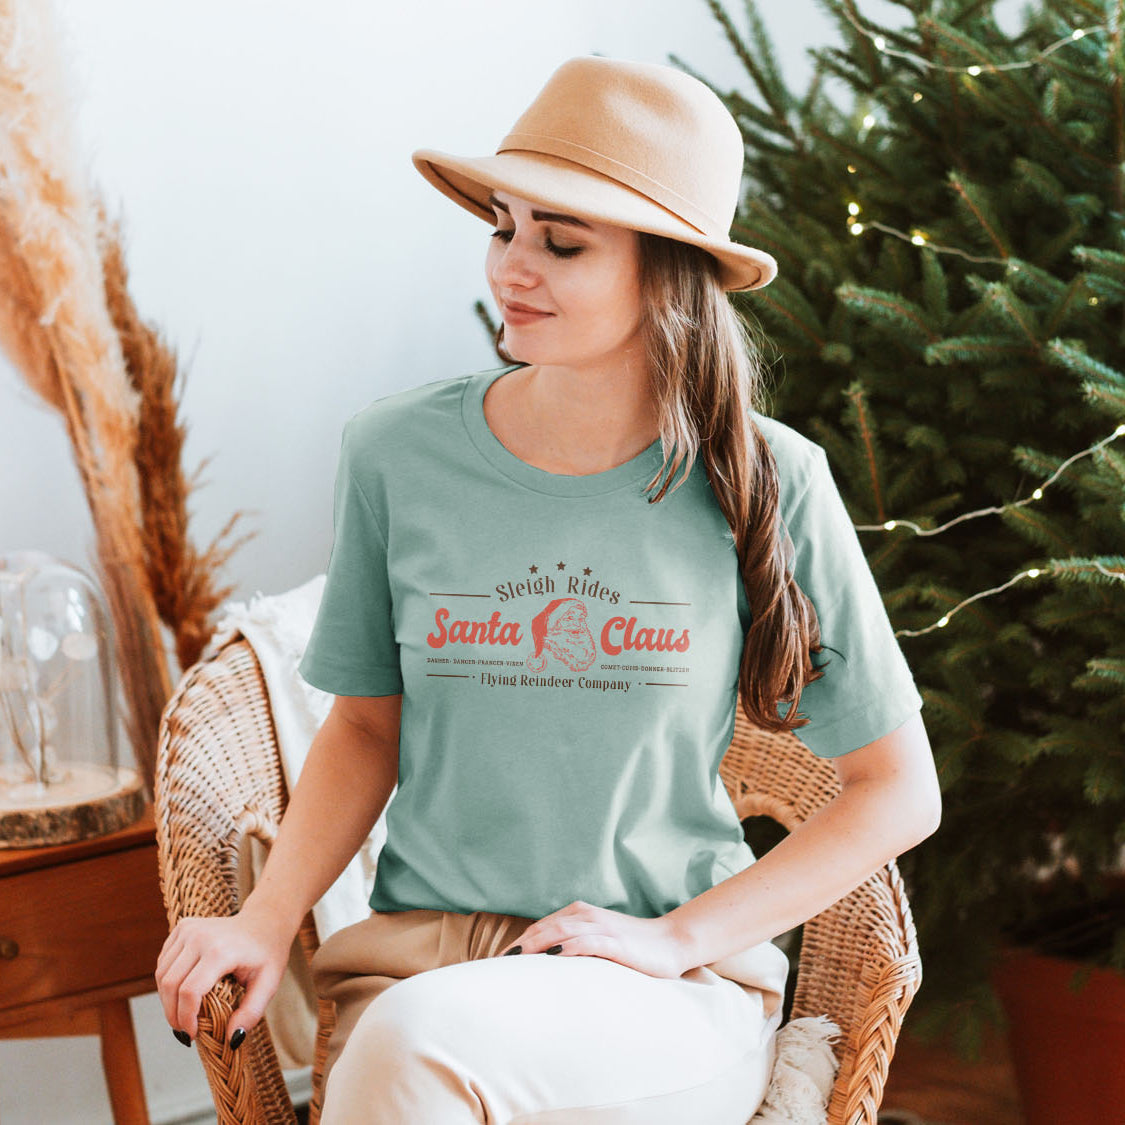 Sleigh Rides Santa Claus Flying Reindeer Company T-shirt - Christmas Winter Retro Vintage Design Printed Tee Shirt